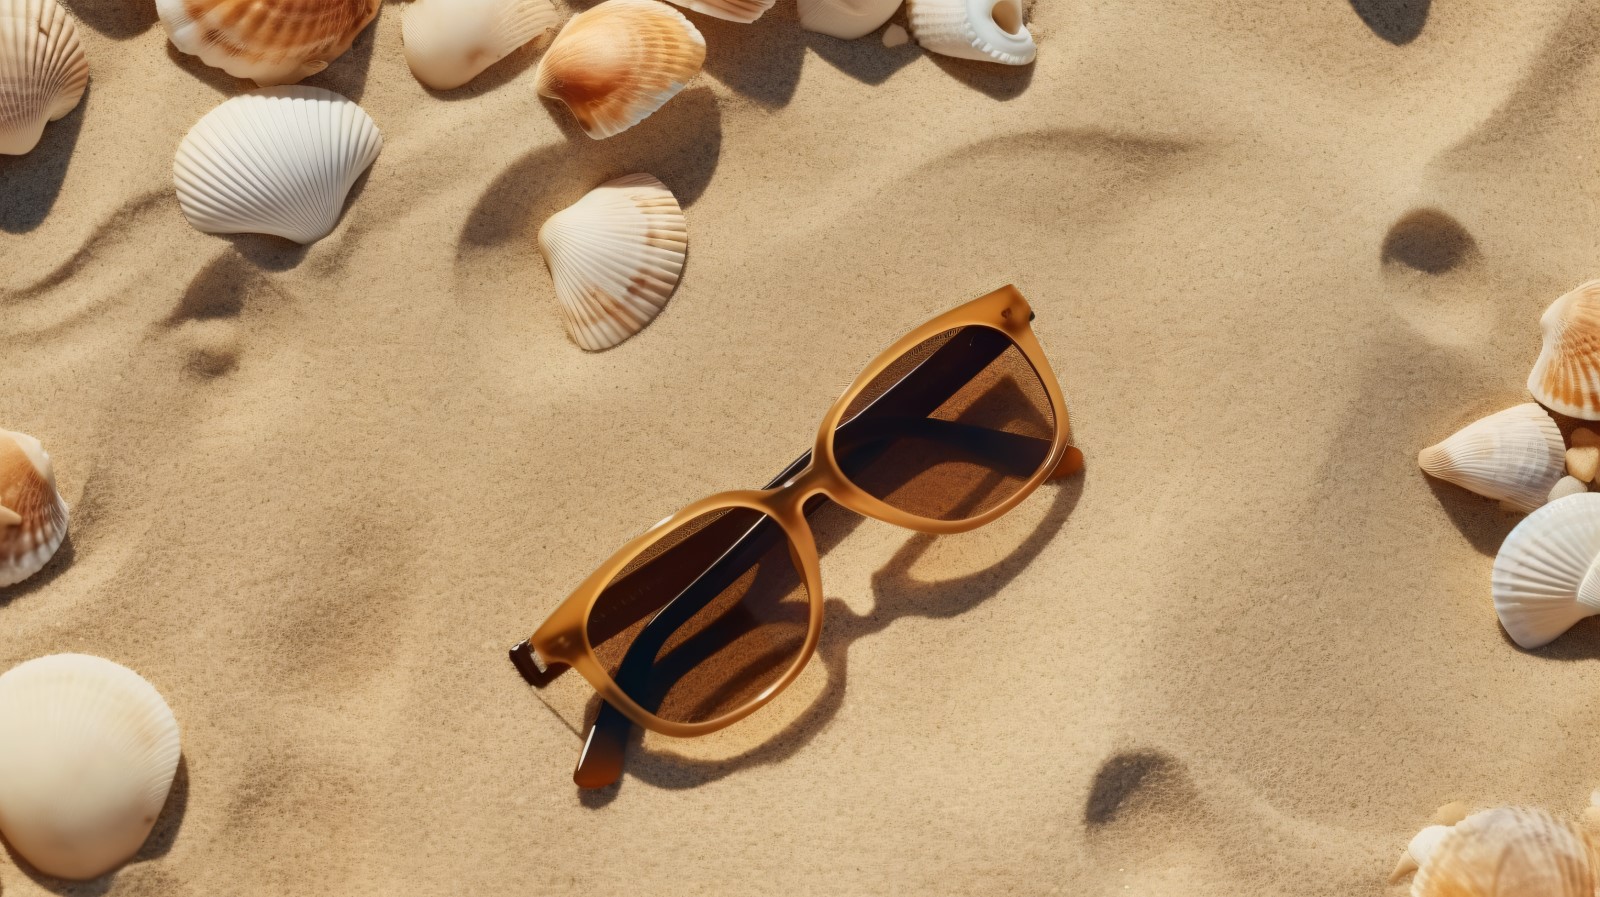 Sunglasses seashells and beach accessories on sandy beach 193